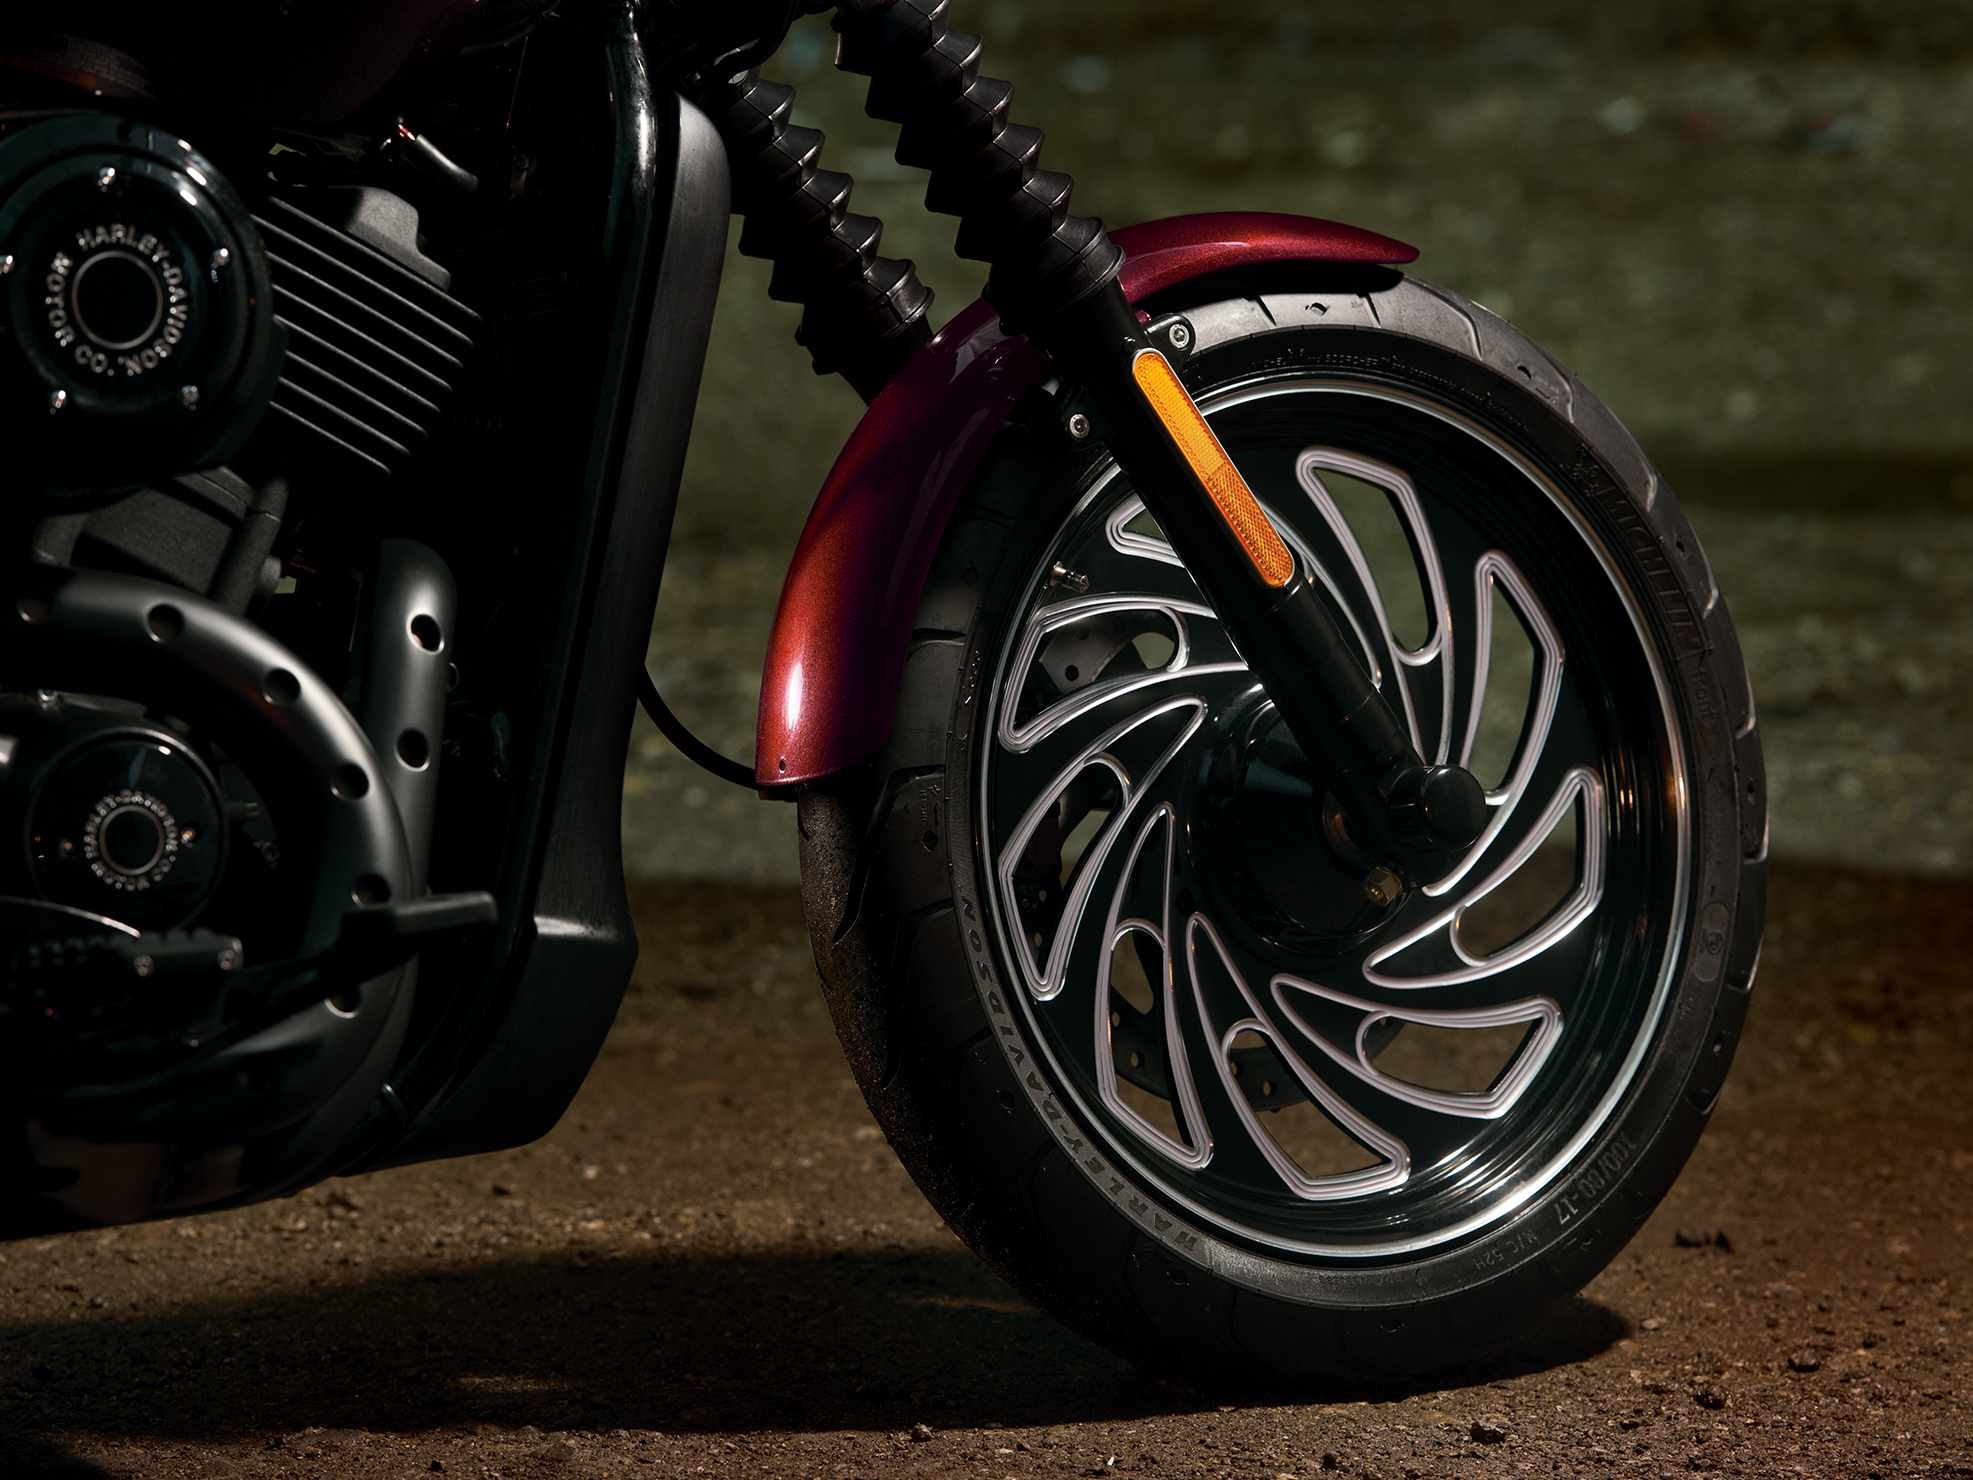  2019  Harley  Davidson  Street  500  Motorcycle Harley  